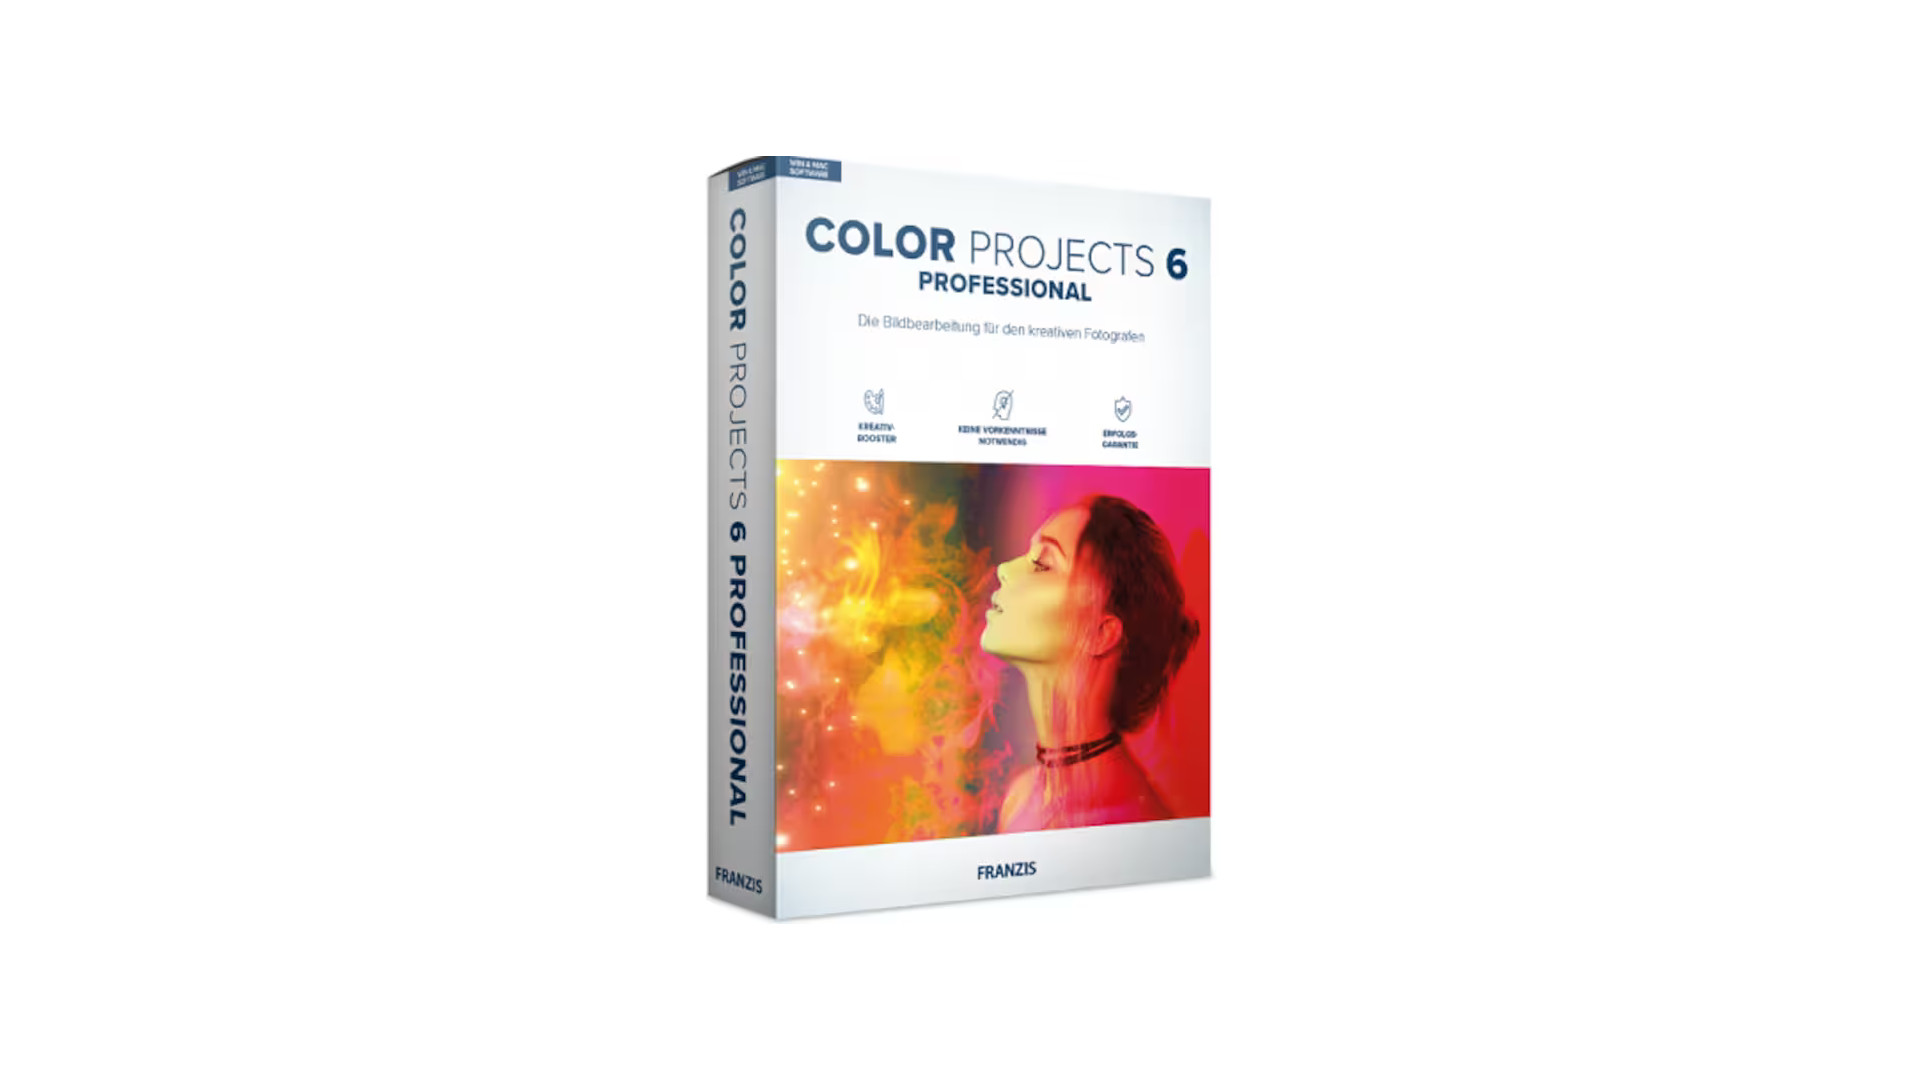 COLOR projects 6 Pro - Project Software Key (Lifetime / 1 PC) 33.89 $